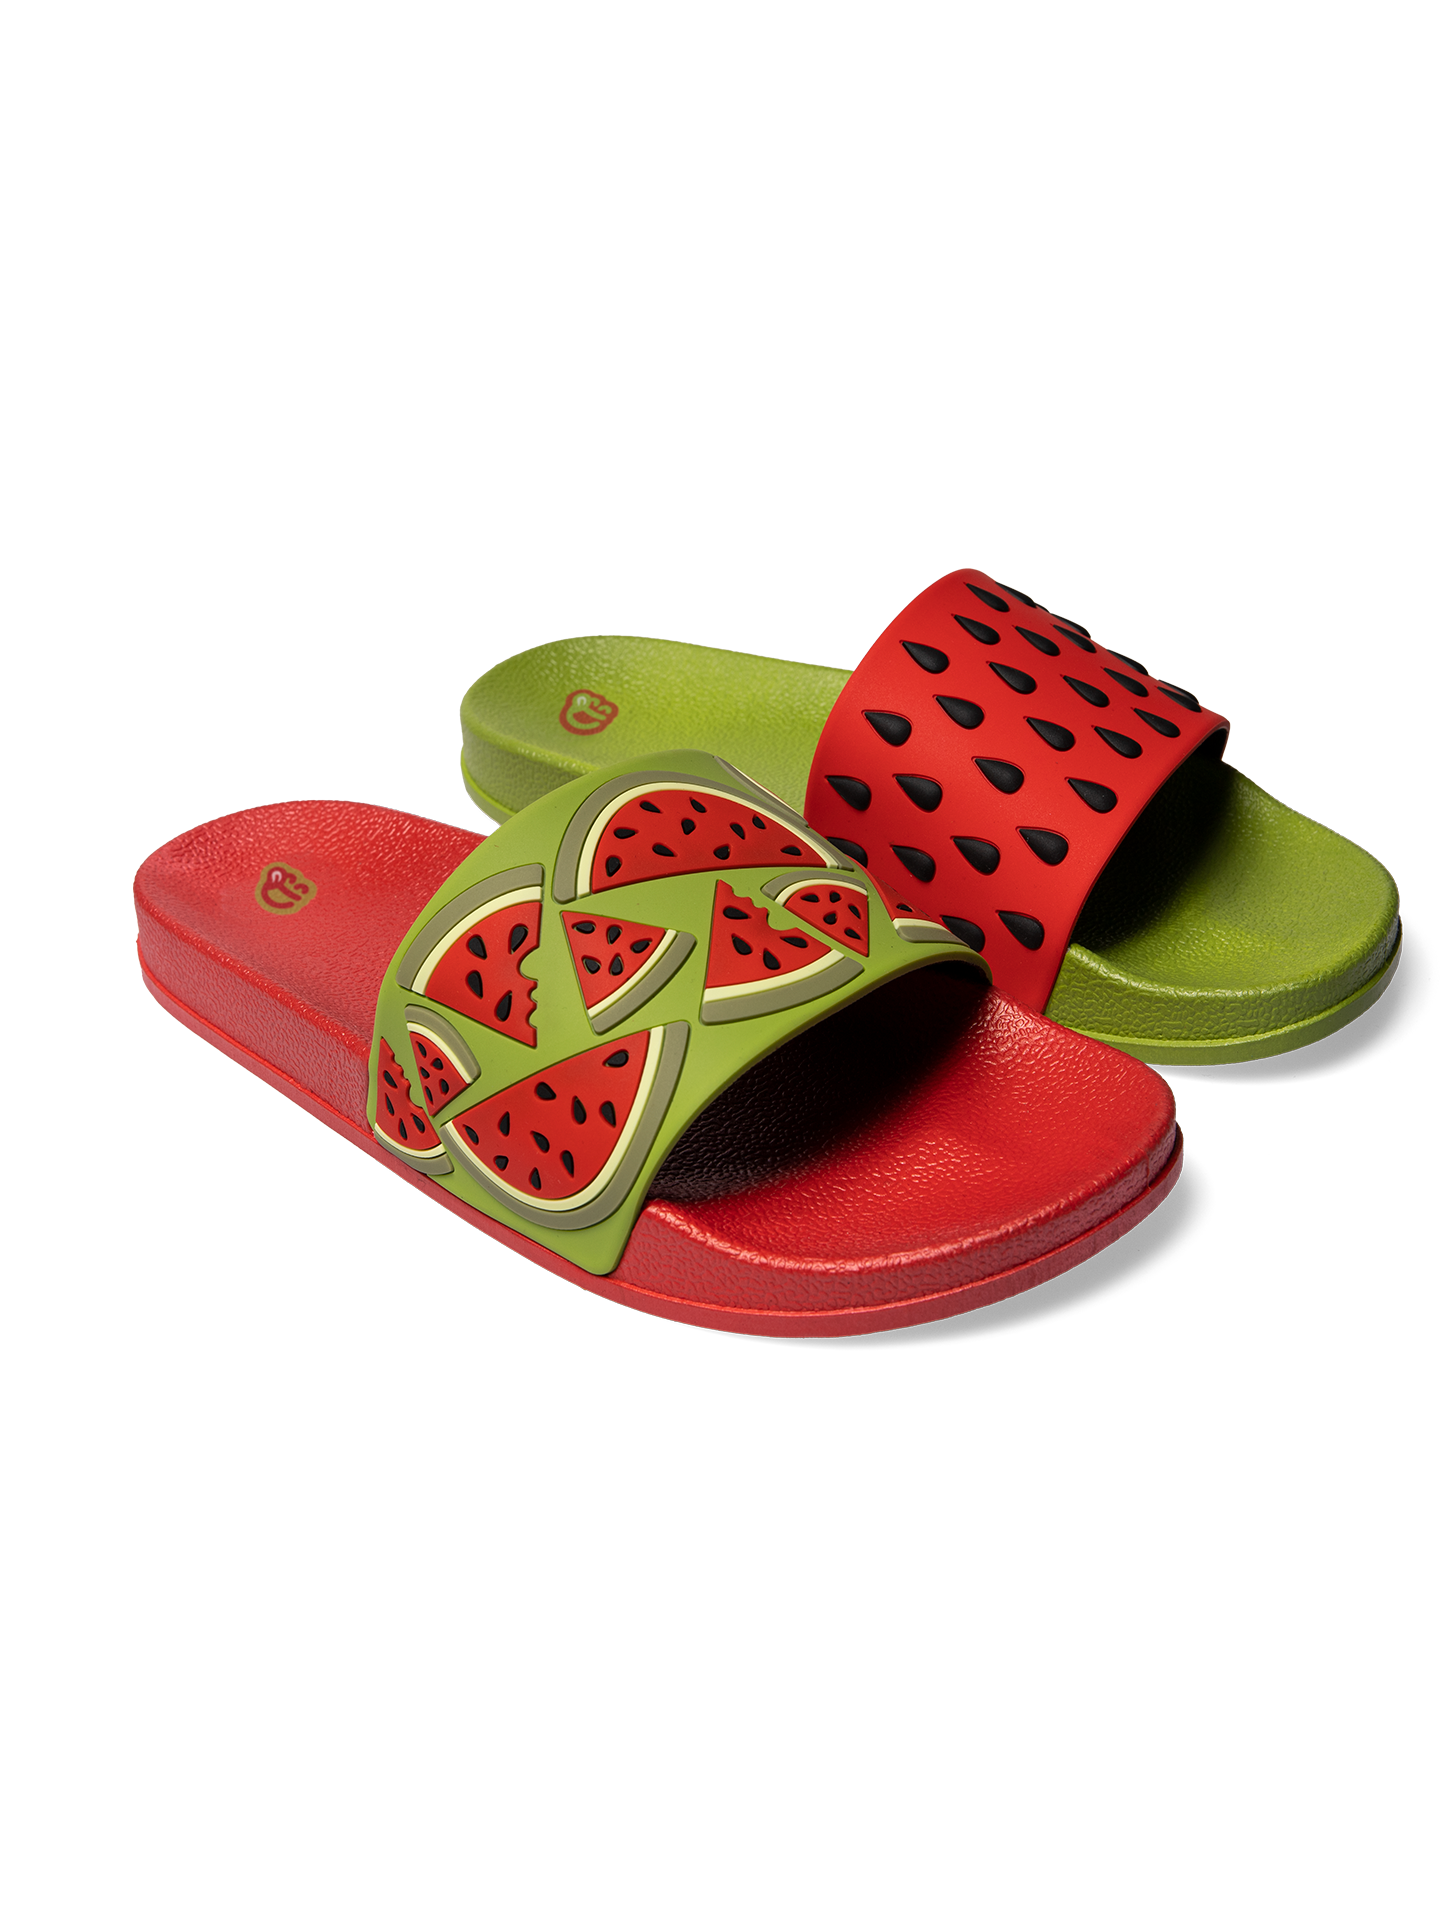 Watermelon Flip Flops/ Pink Green Brushstrokes And Polkadots